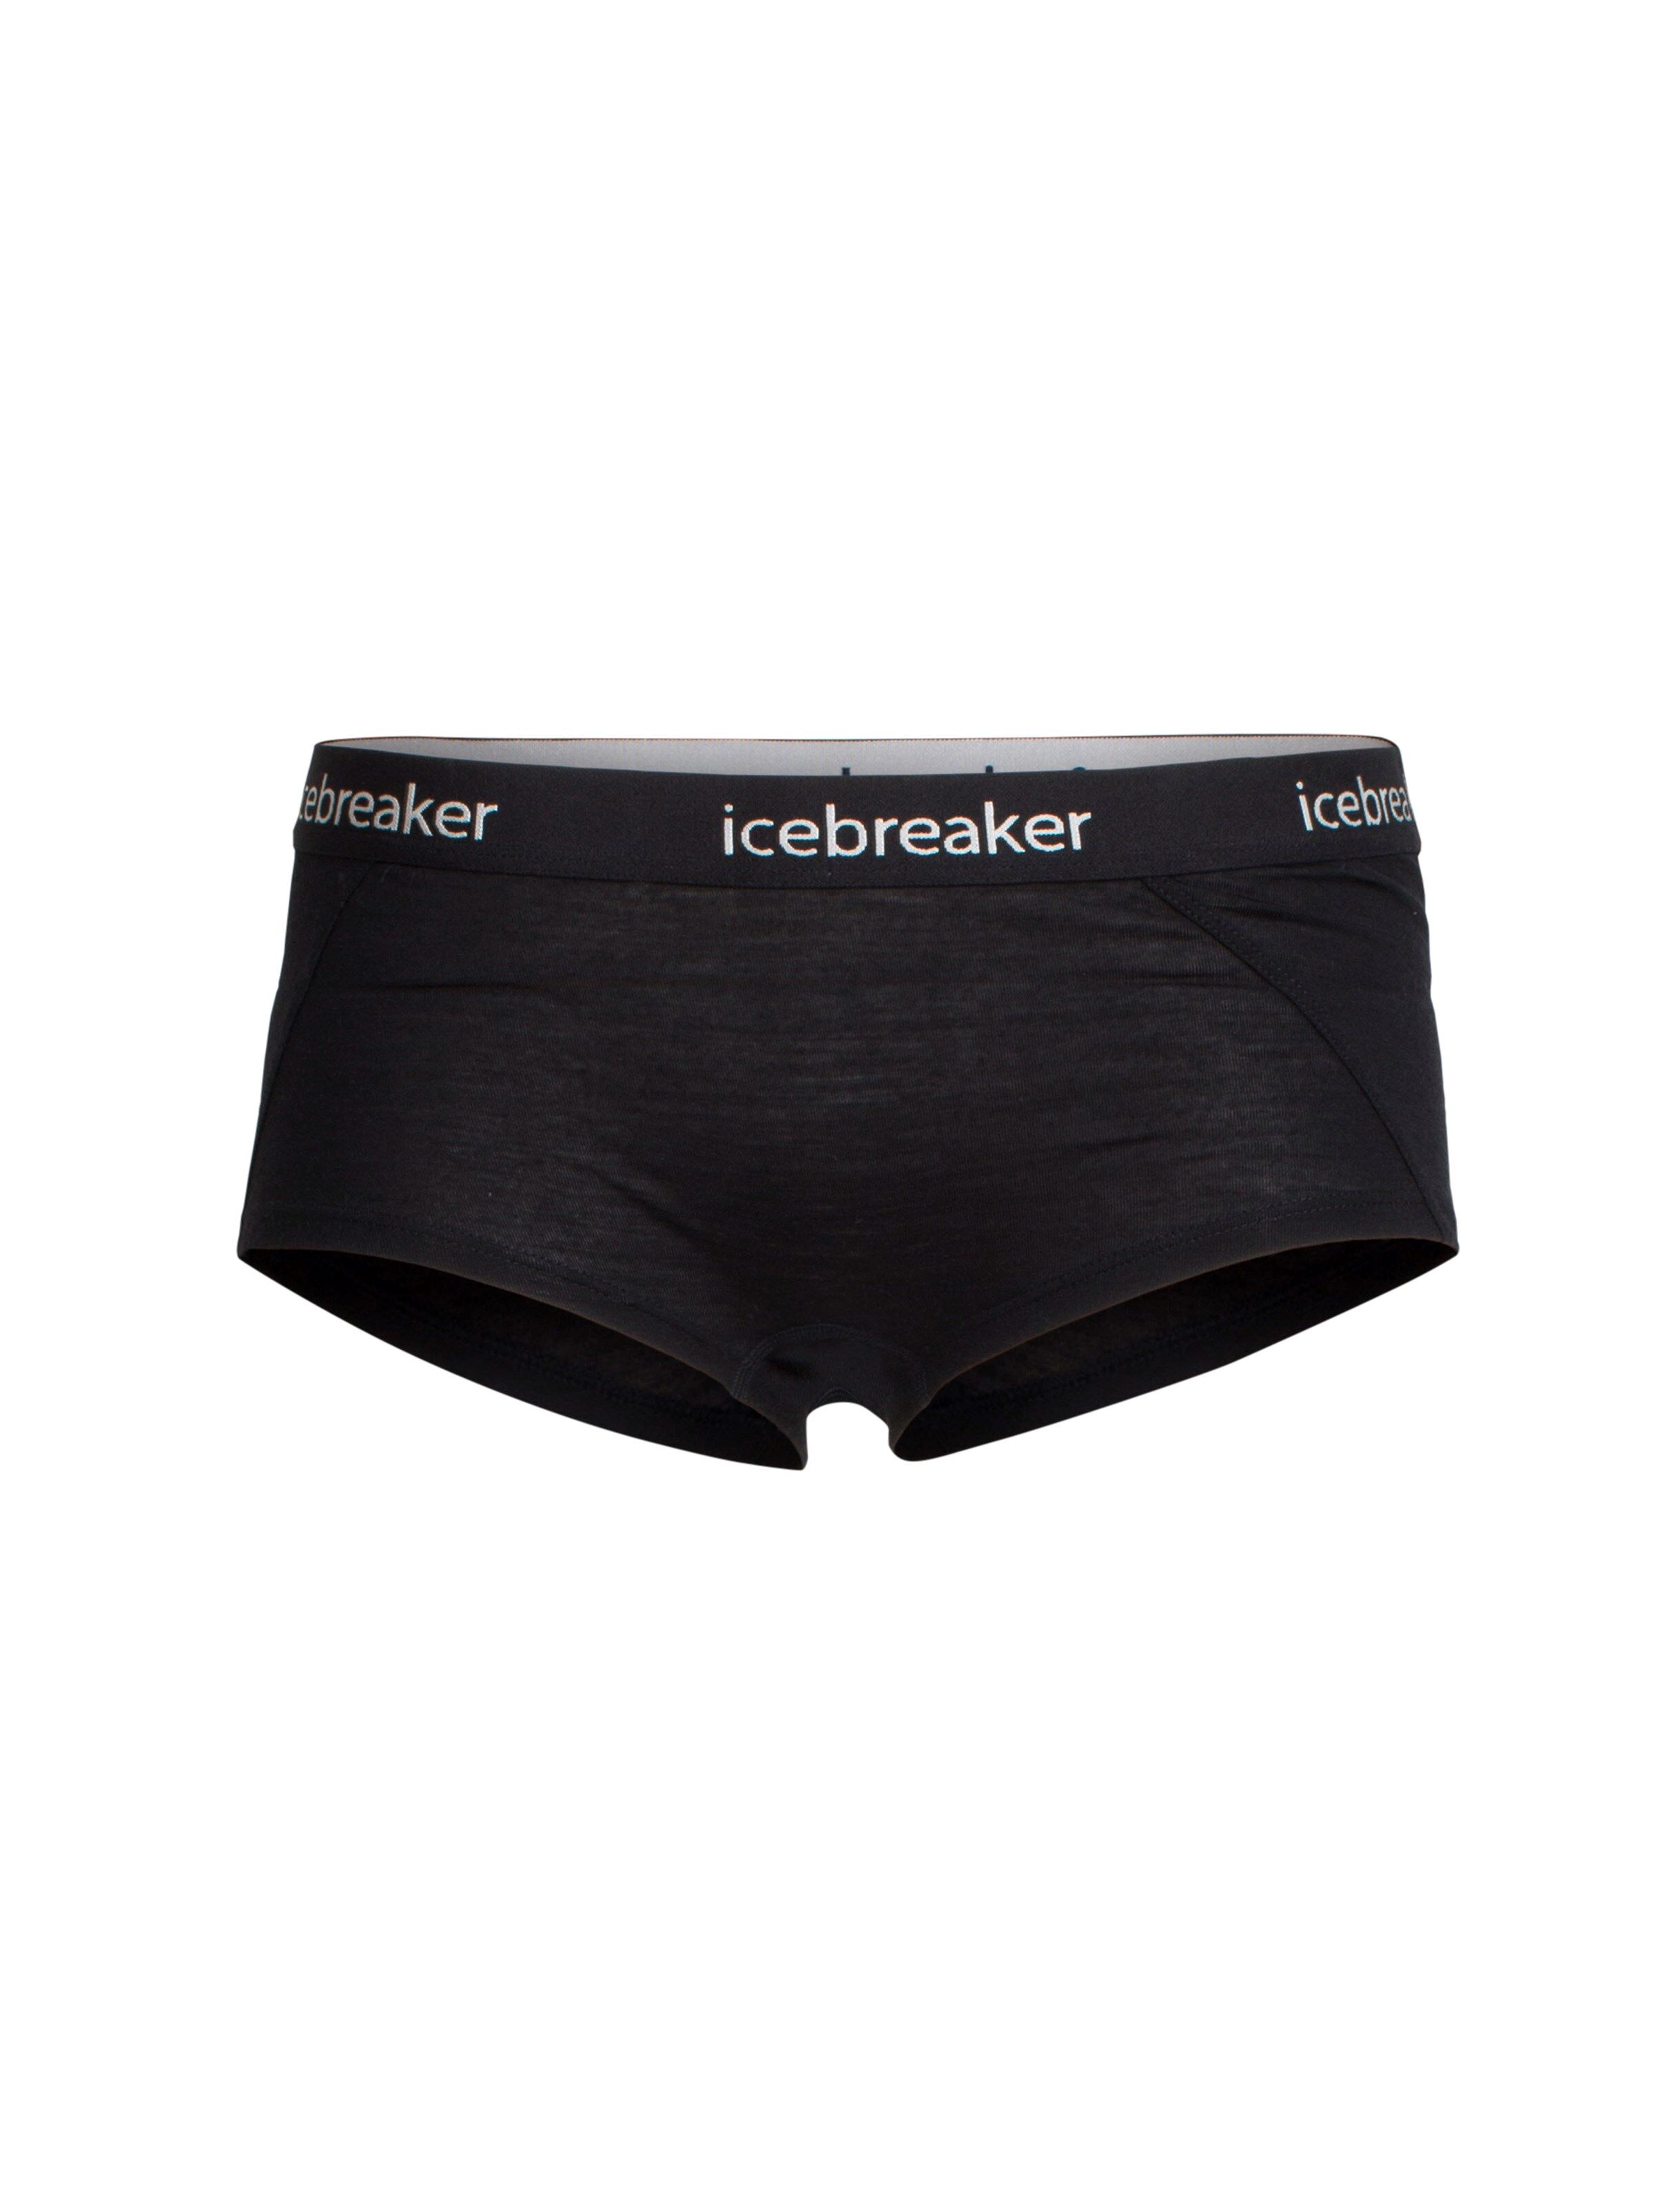 Icebreaker Sprite Hot pants, undertøy dame Black 103023001 S 2020